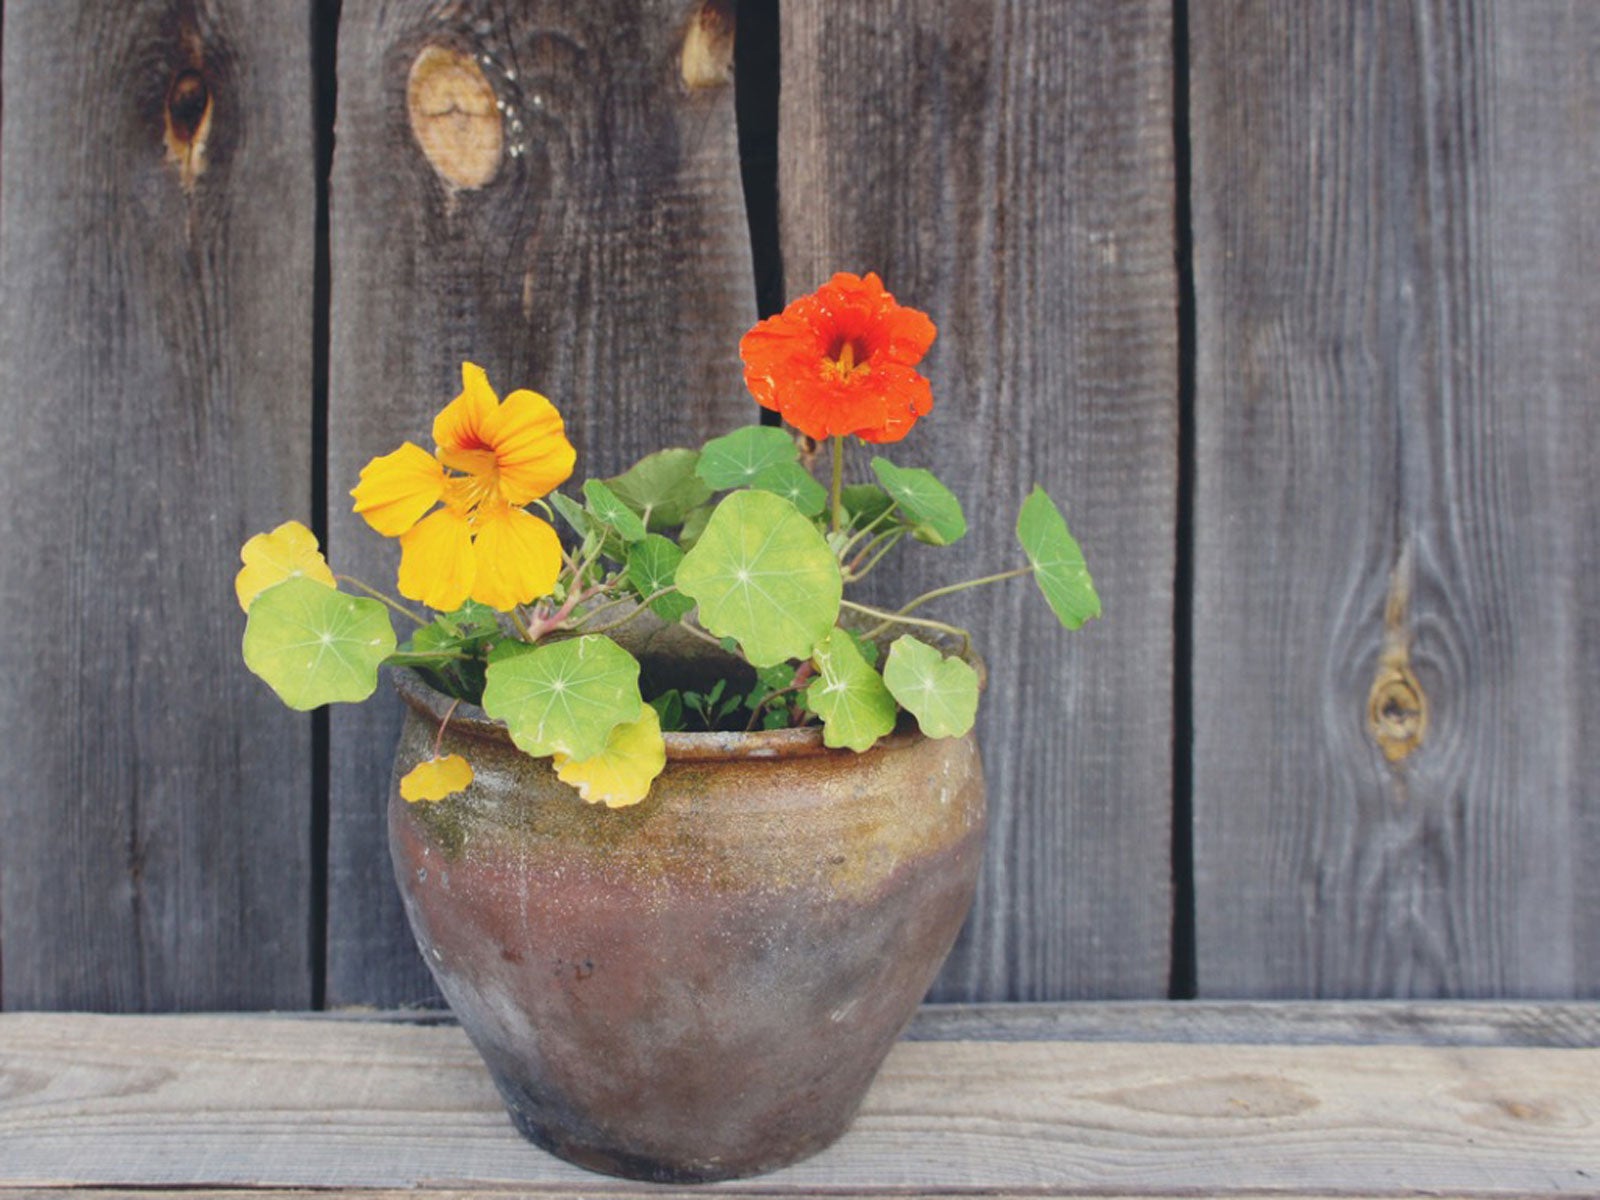 How To Pot Nasturtiums – Container Growing Nasturtium Plants